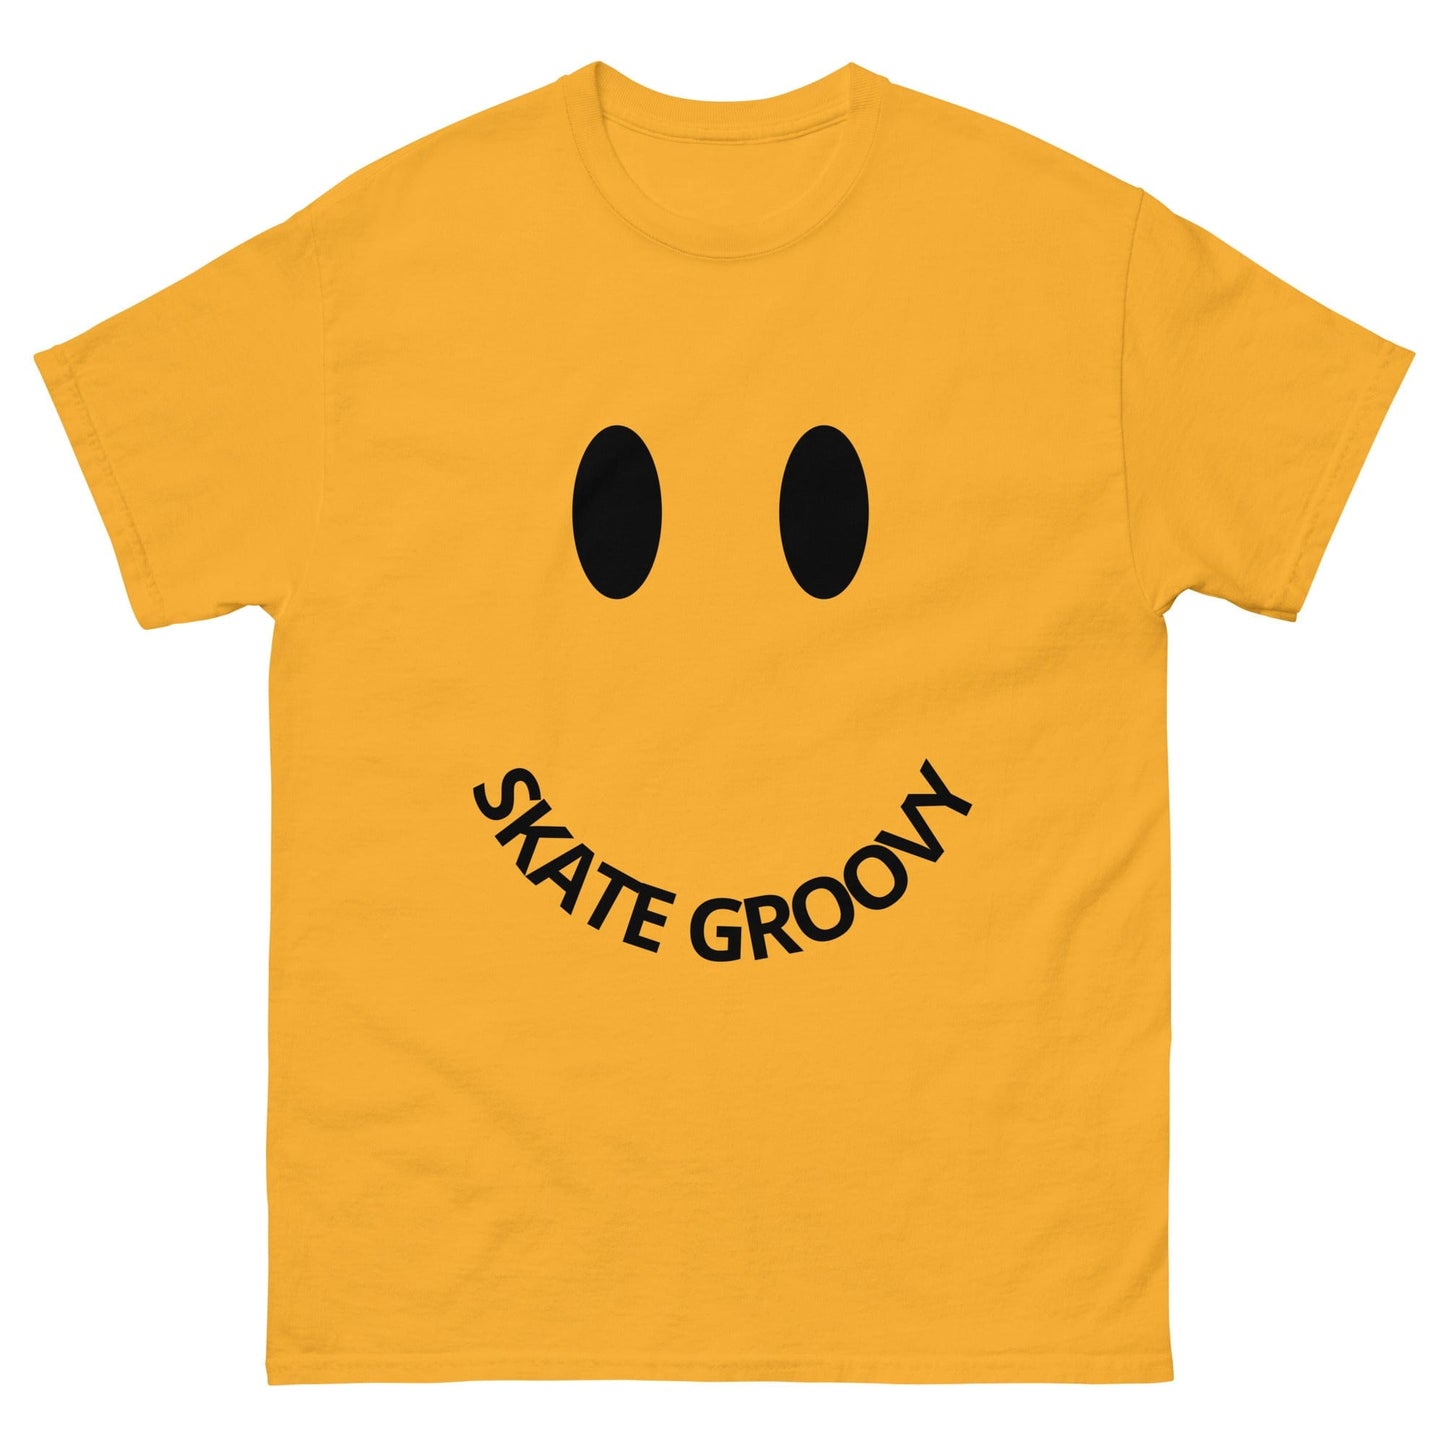  Skate Groovy T-Shirt The Groove Skate Shop The Groove Skate Shop